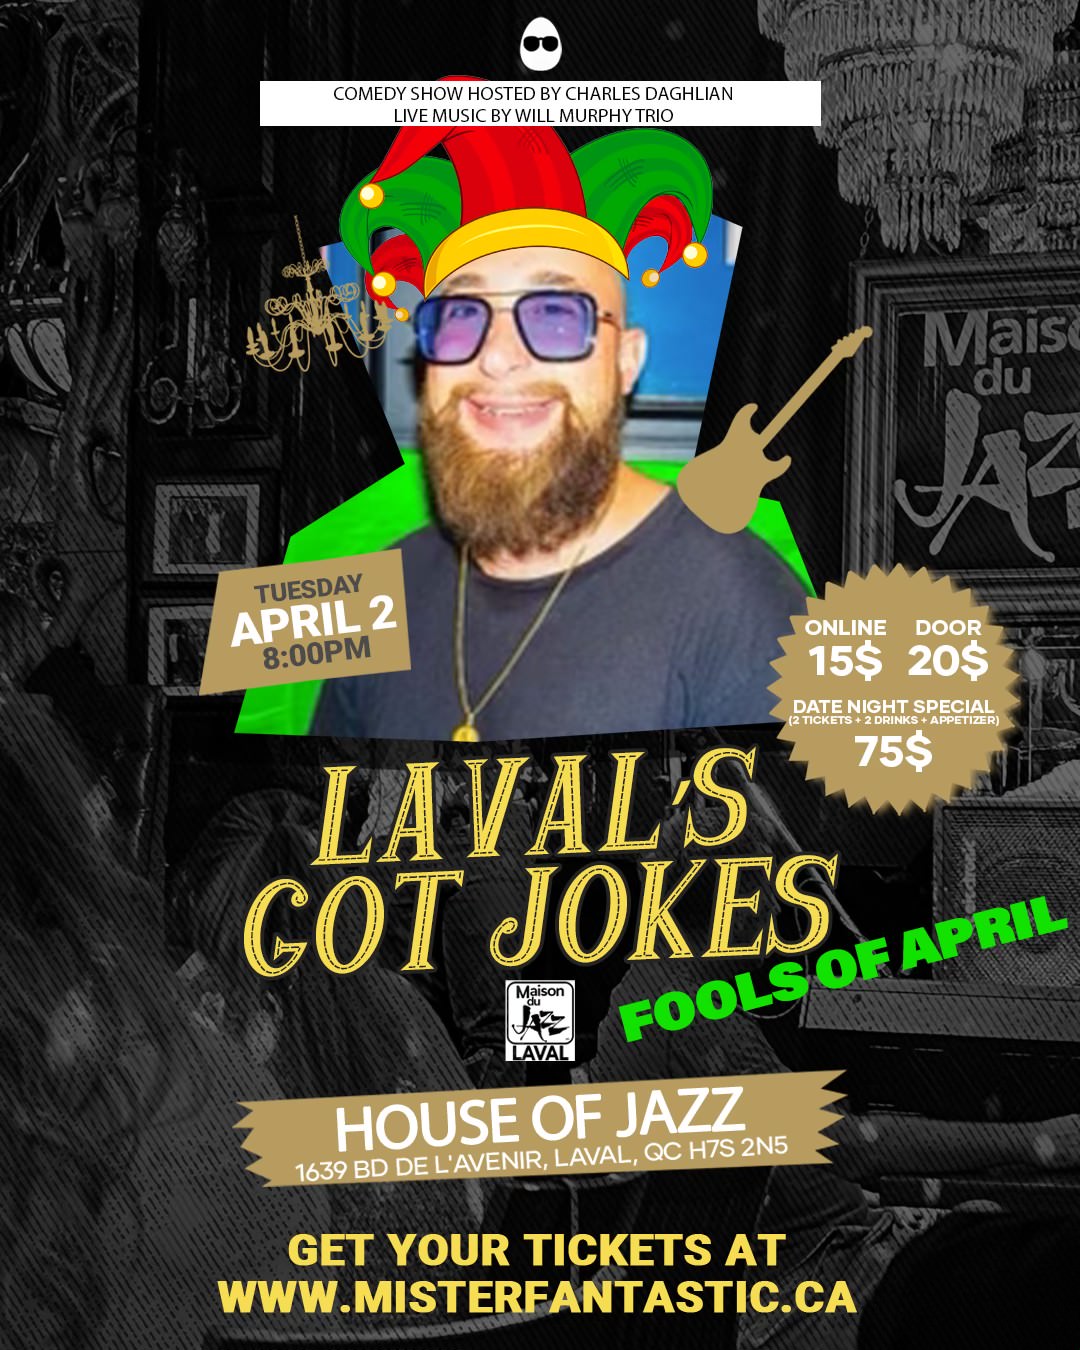 LAVAL’S GOT JOKES (Fools of April)